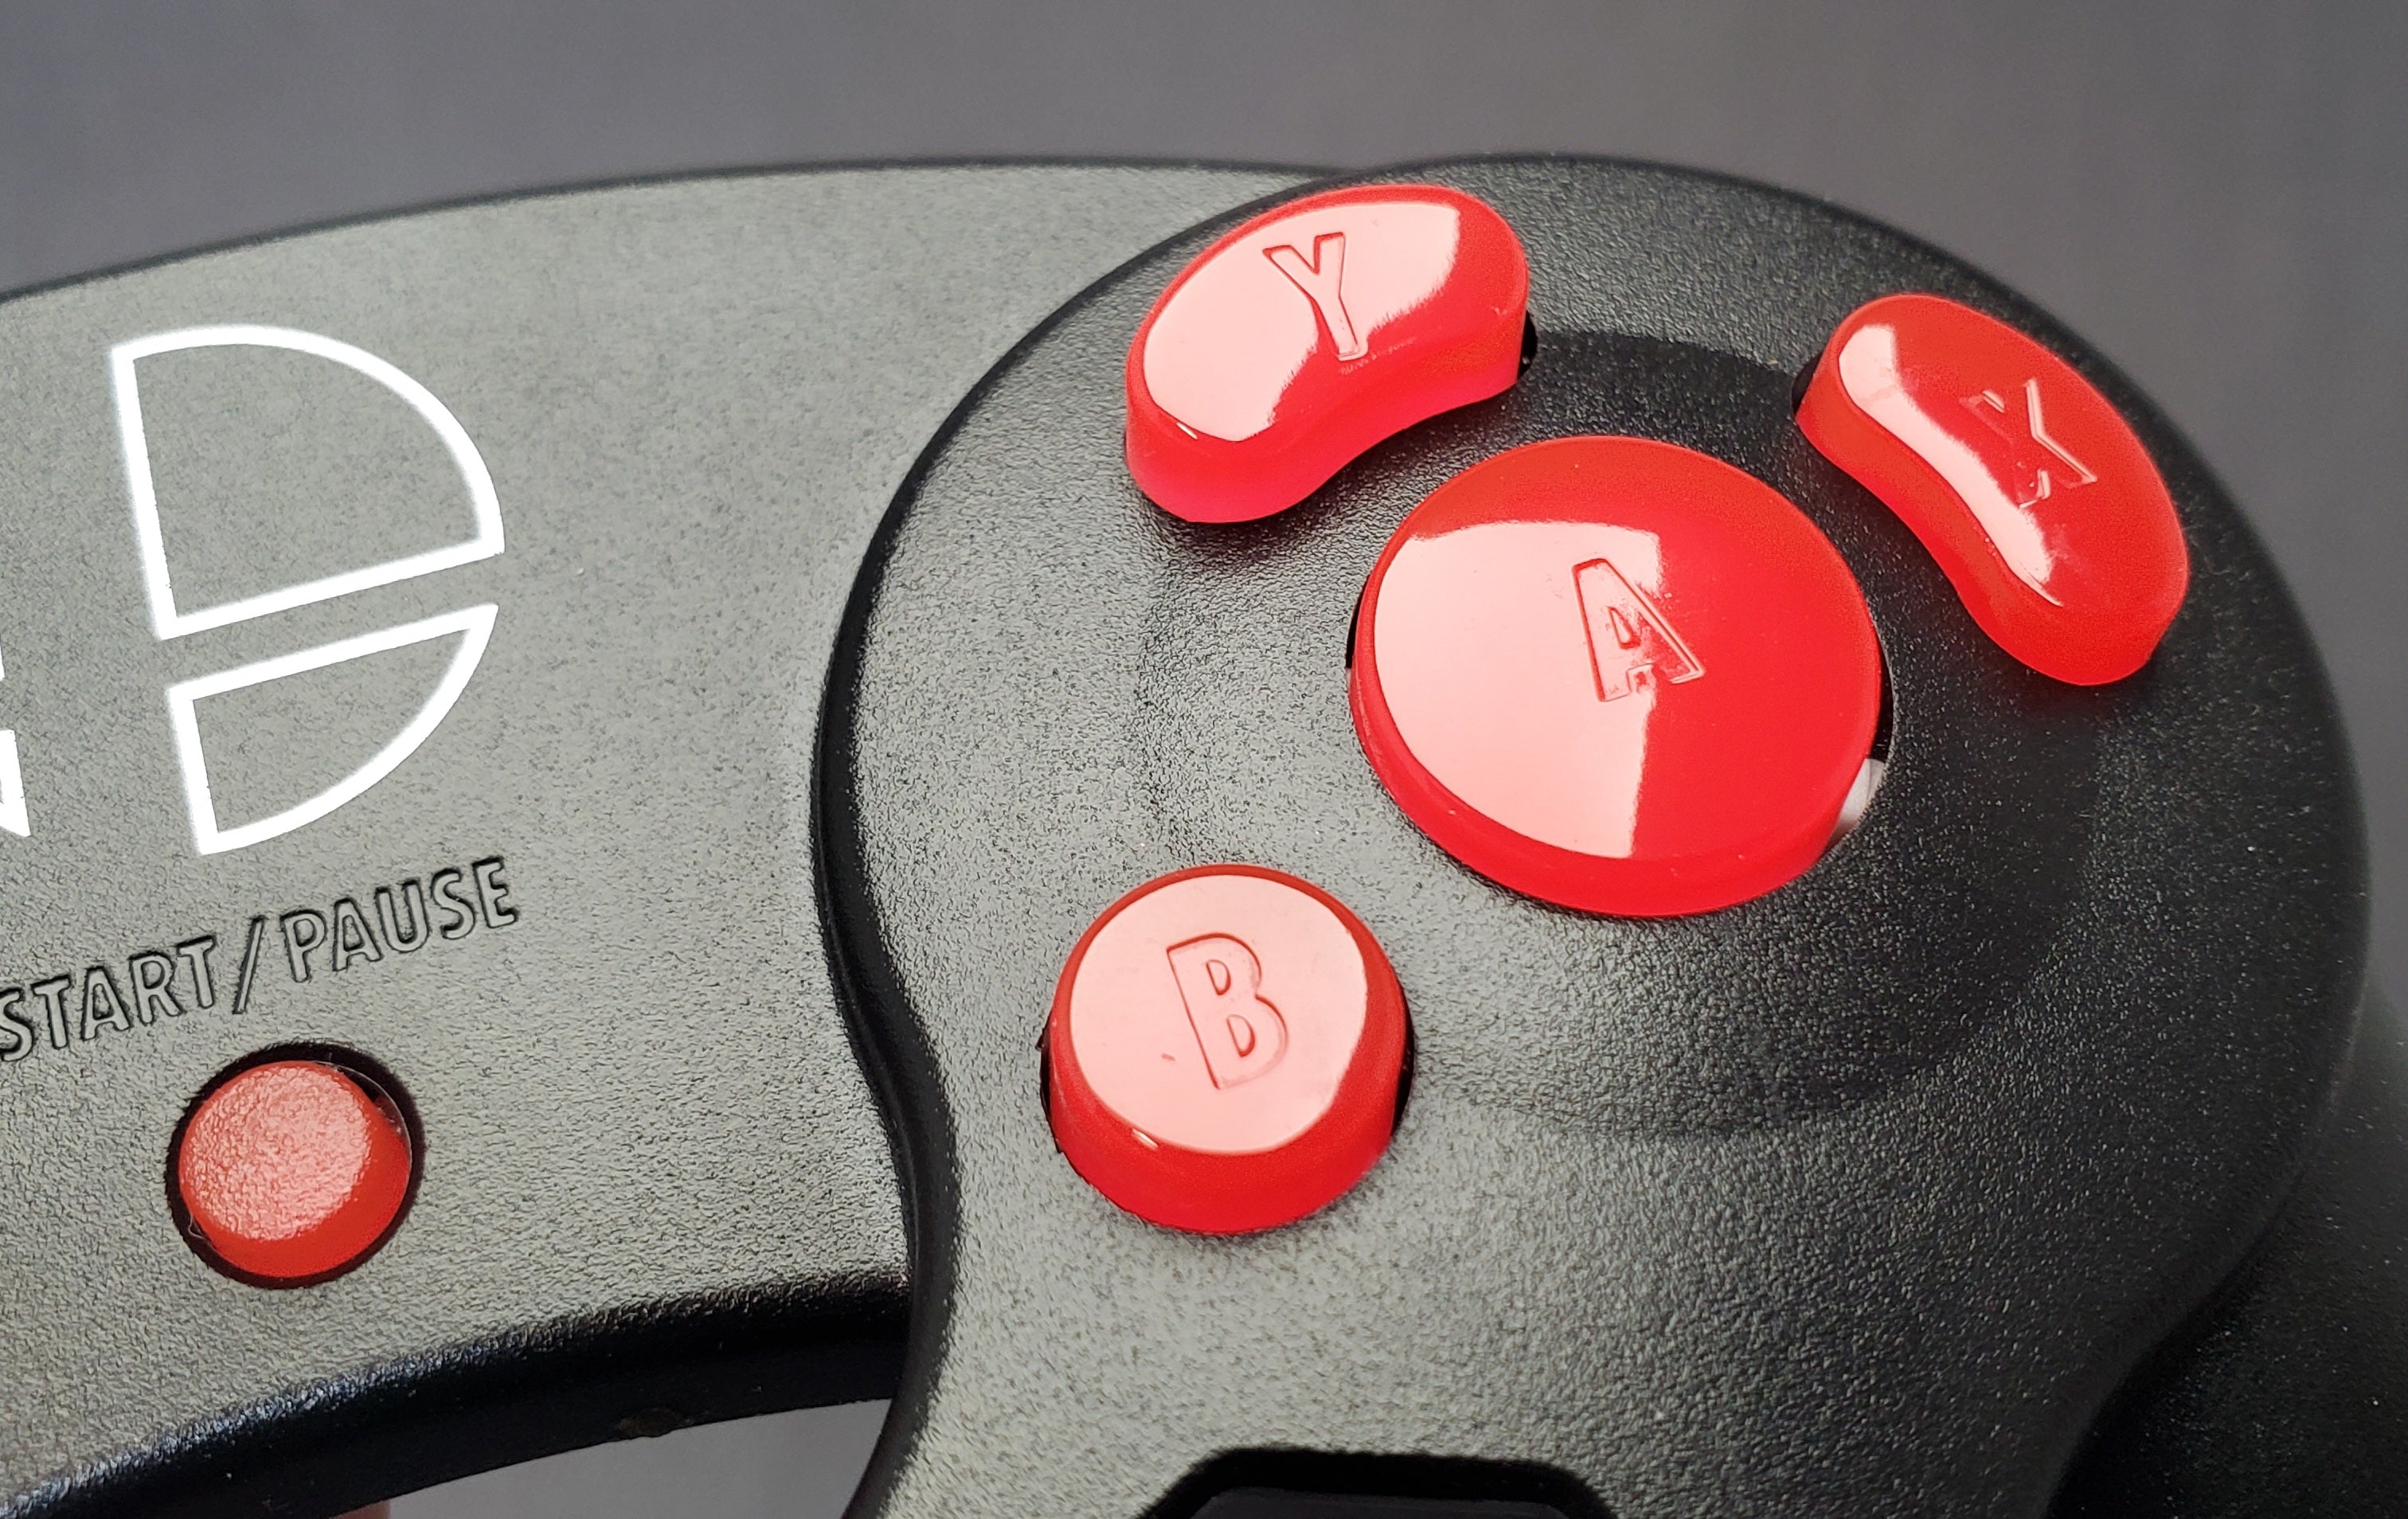 GameCube Controller Buttons | Resin | RockerGaming RockerGaming